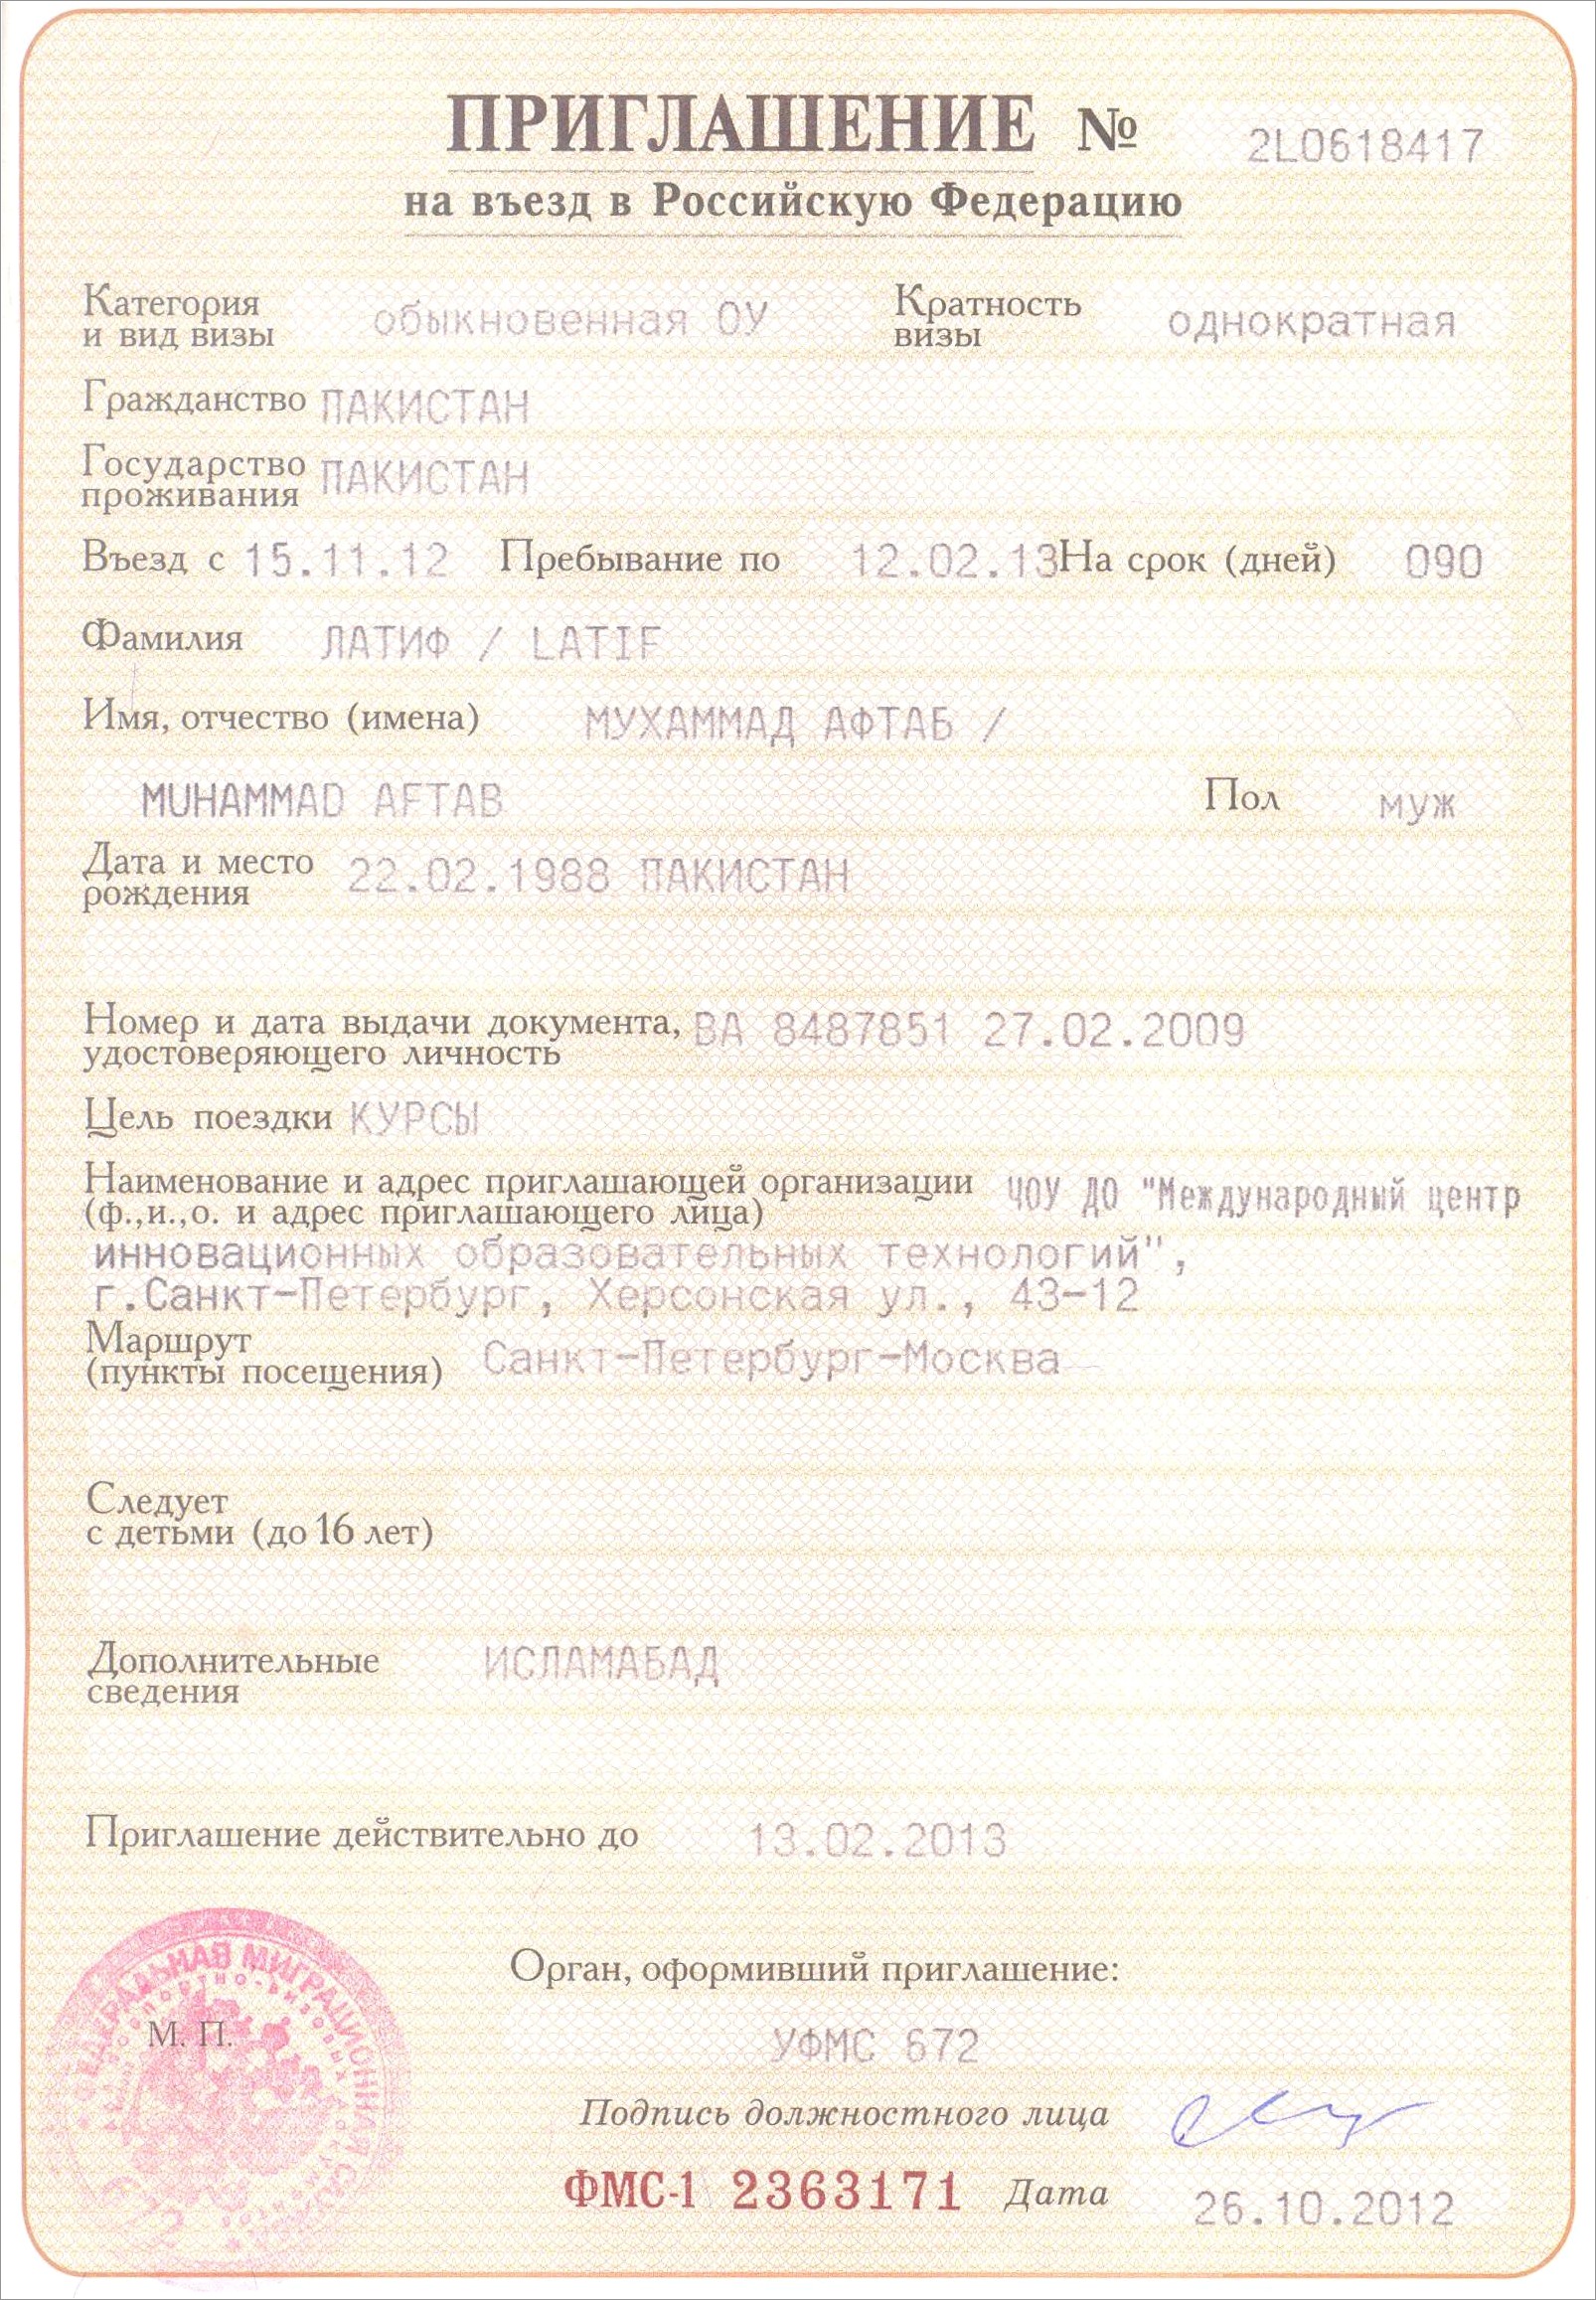 Invitation Letter For Russian Tourist Visa